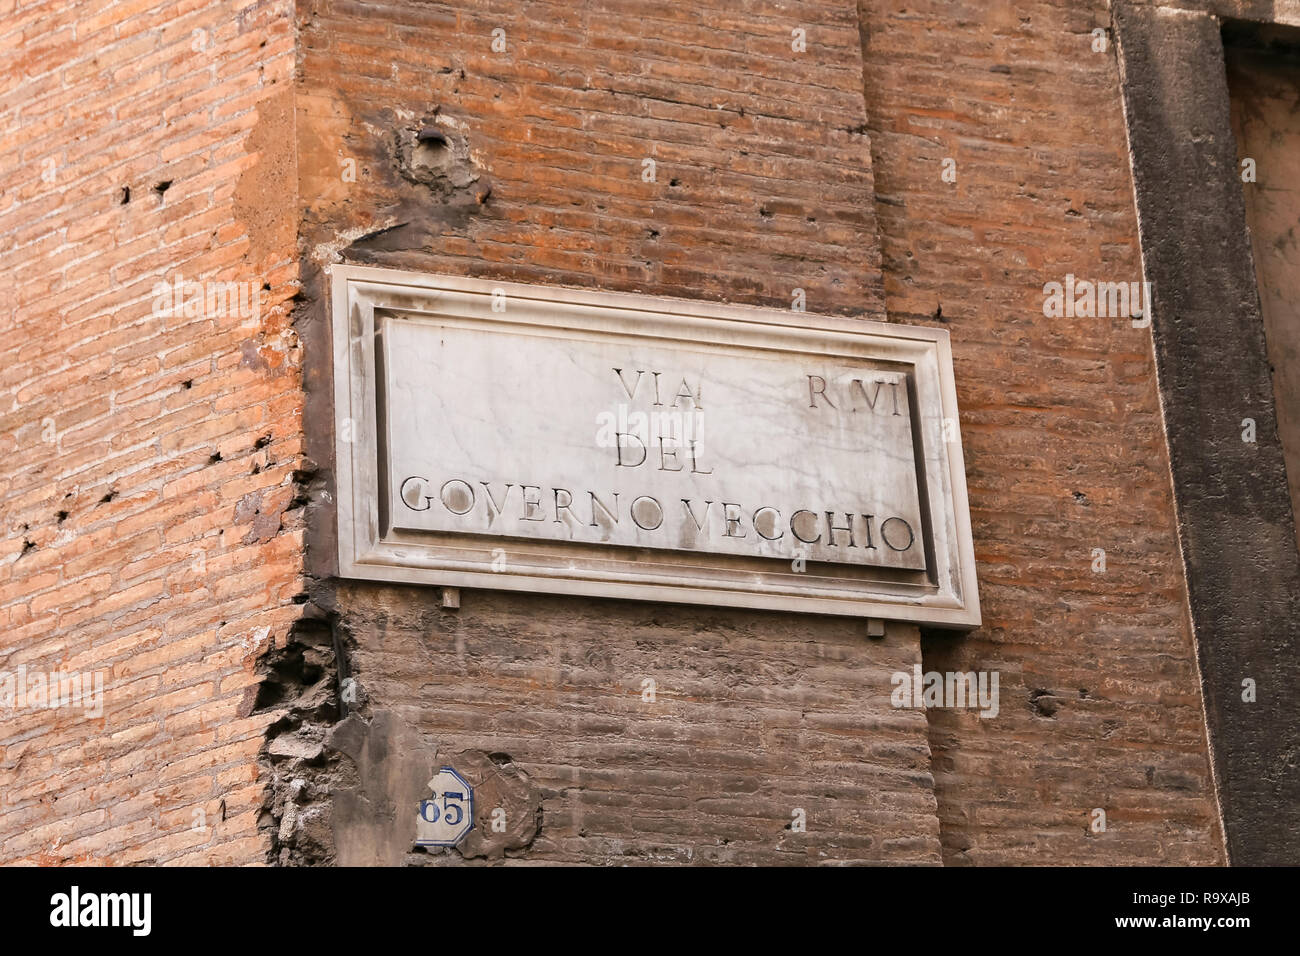 Via del Governo Vecchio calle signo en la ciudad de Roma, Italia Foto de stock